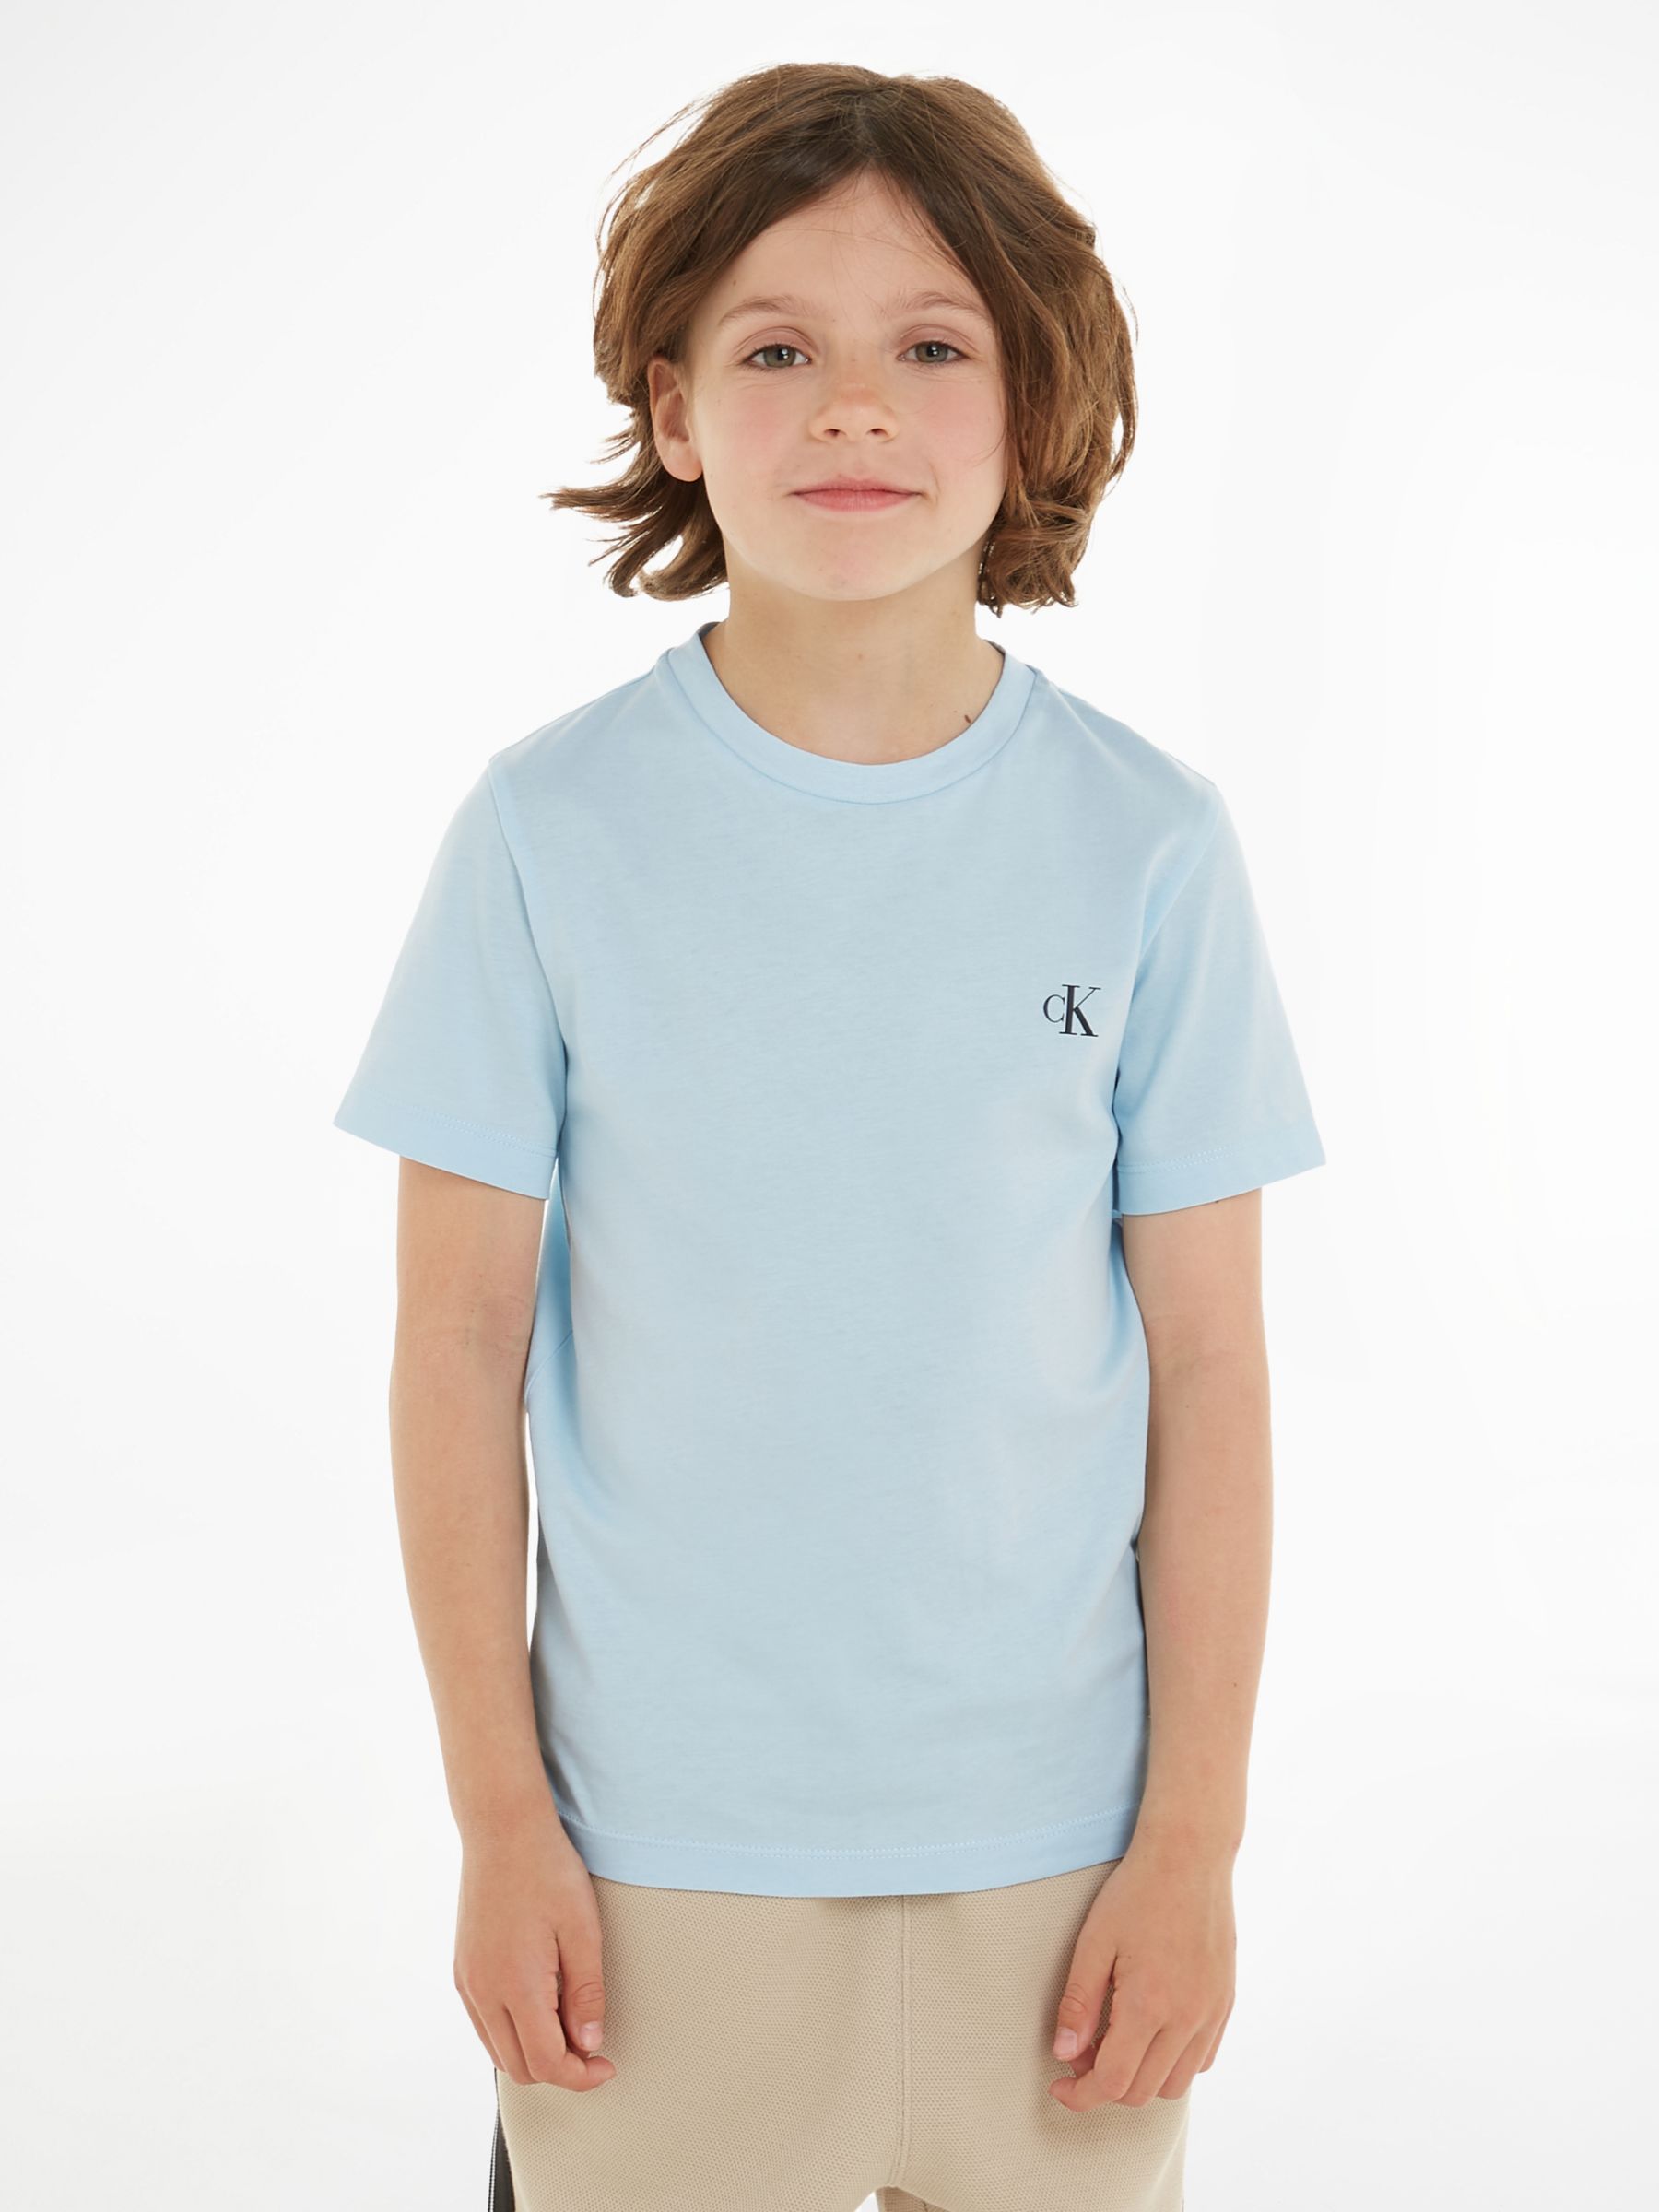 Buy Calvin Klein Kids' Cotton Monogram Short Sleeve T-Shirts, Pack of 2, Keepsake Blue/Ck Black Online at johnlewis.com